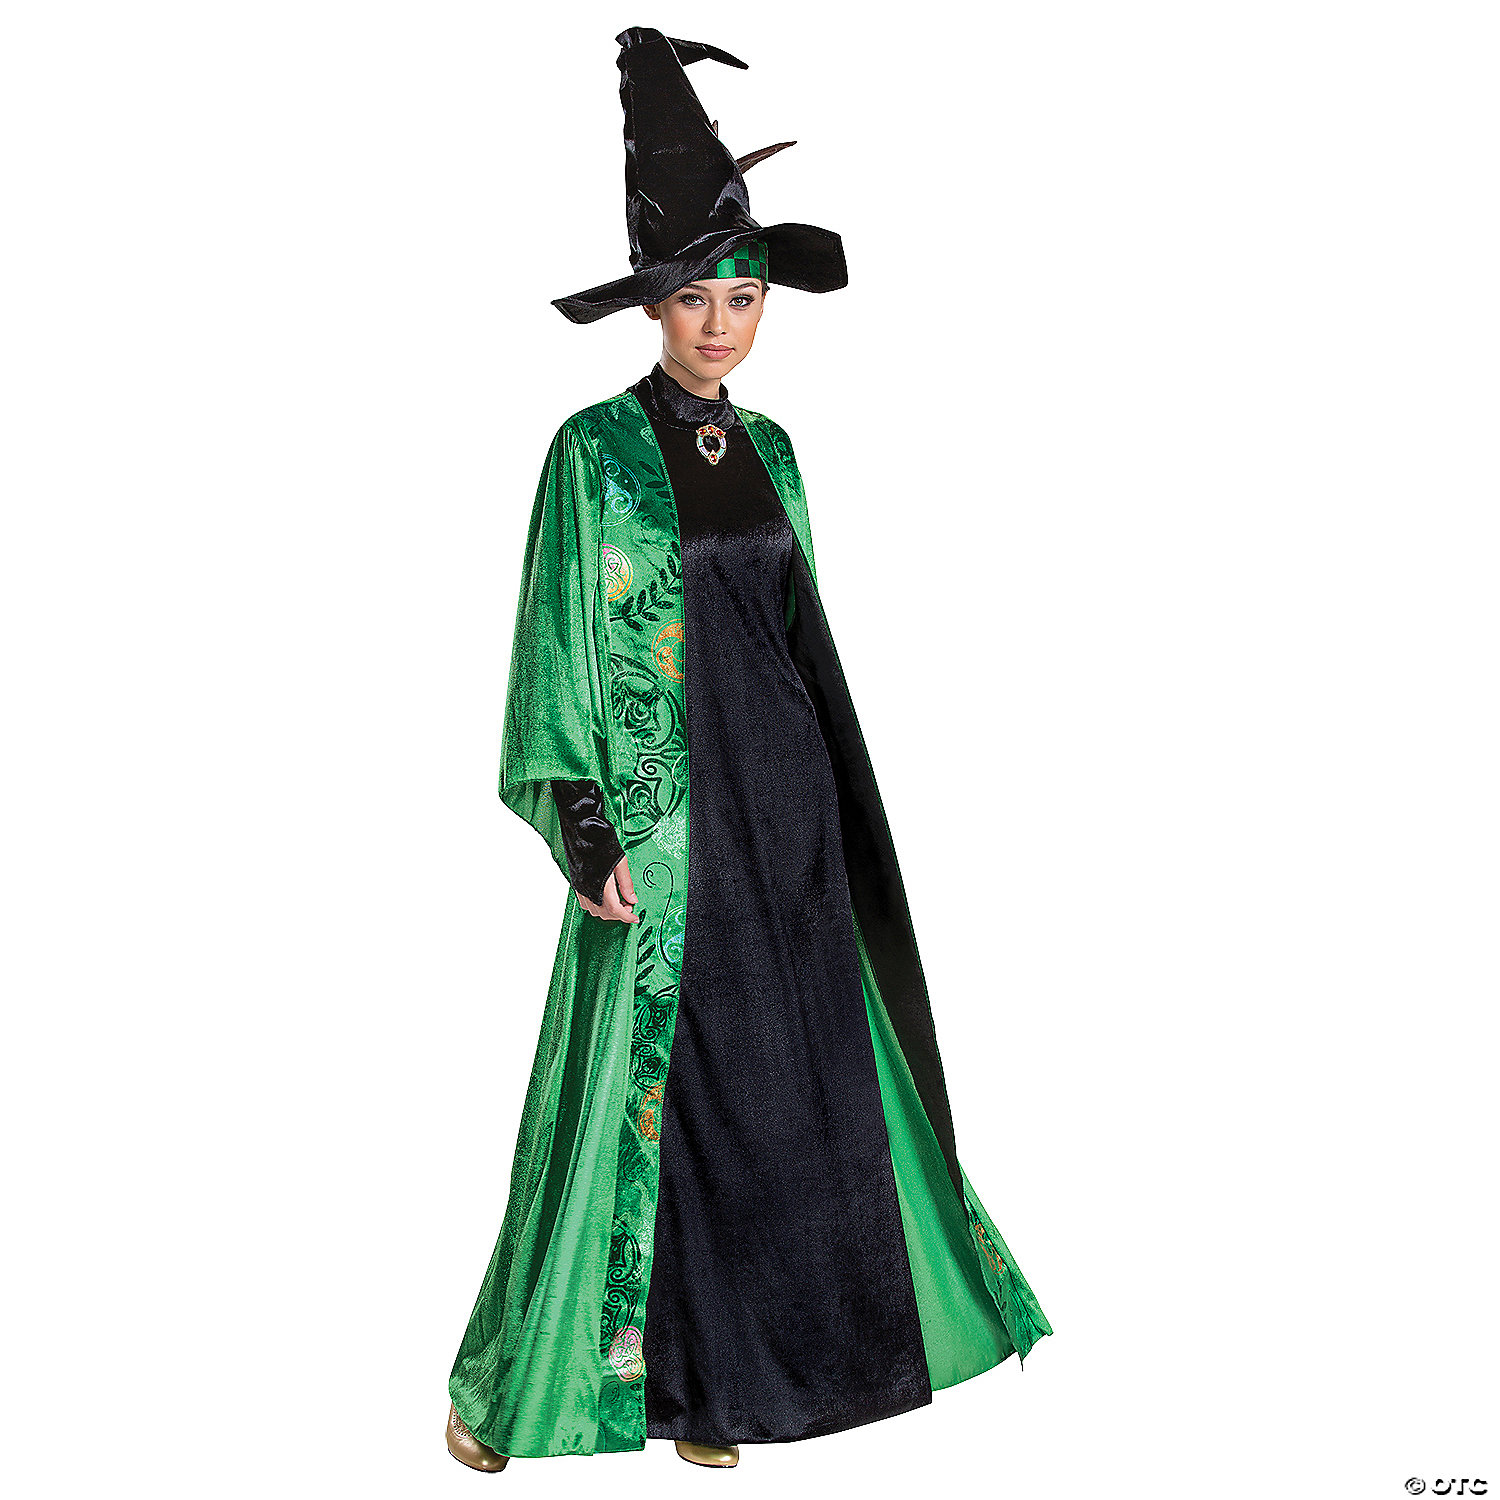 Deluxe Harry Potter Boy's Costume